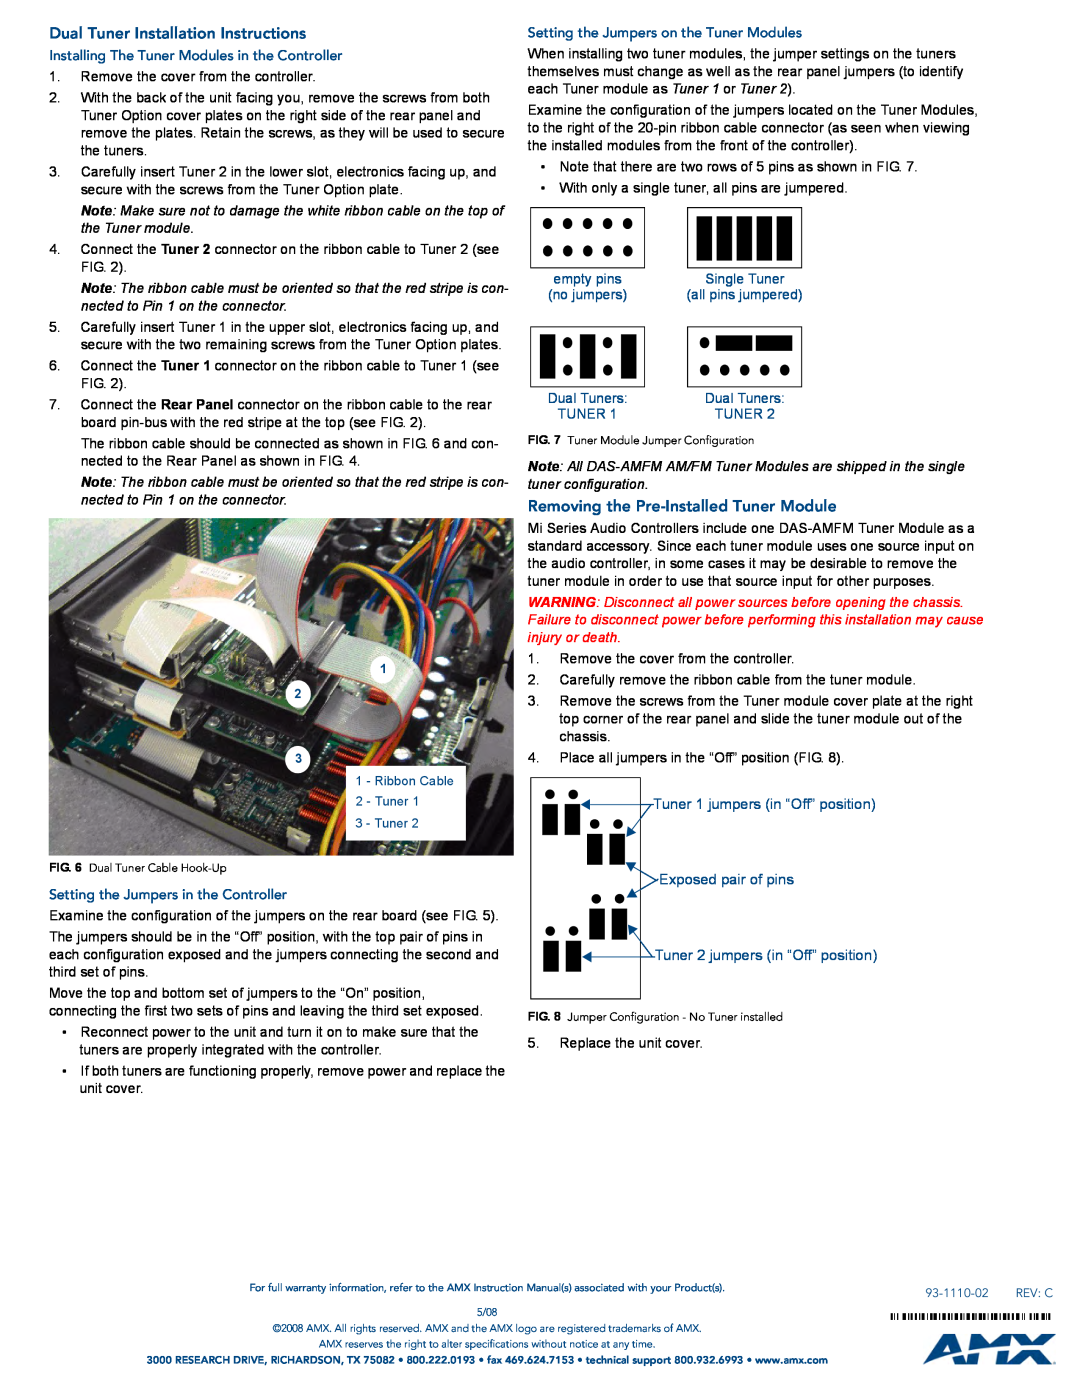 AMX DAS-AMFM installation instructions Dual Tuner Installation Instructions, Removing the Pre-InstalledTuner Module 